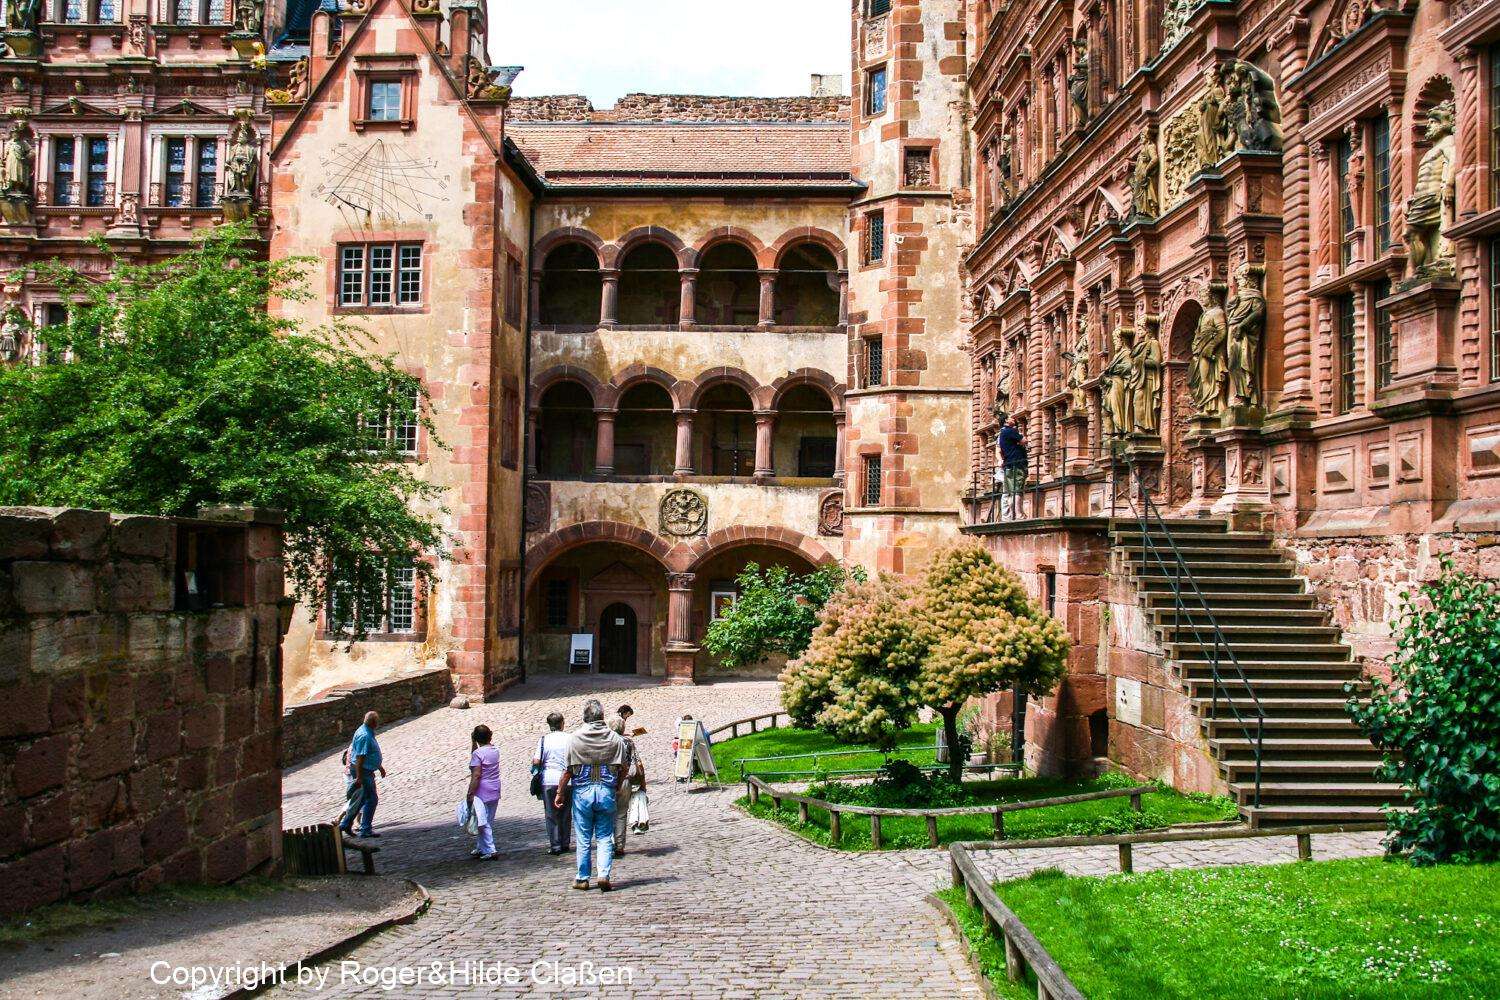 Das Schloss Heidelberg